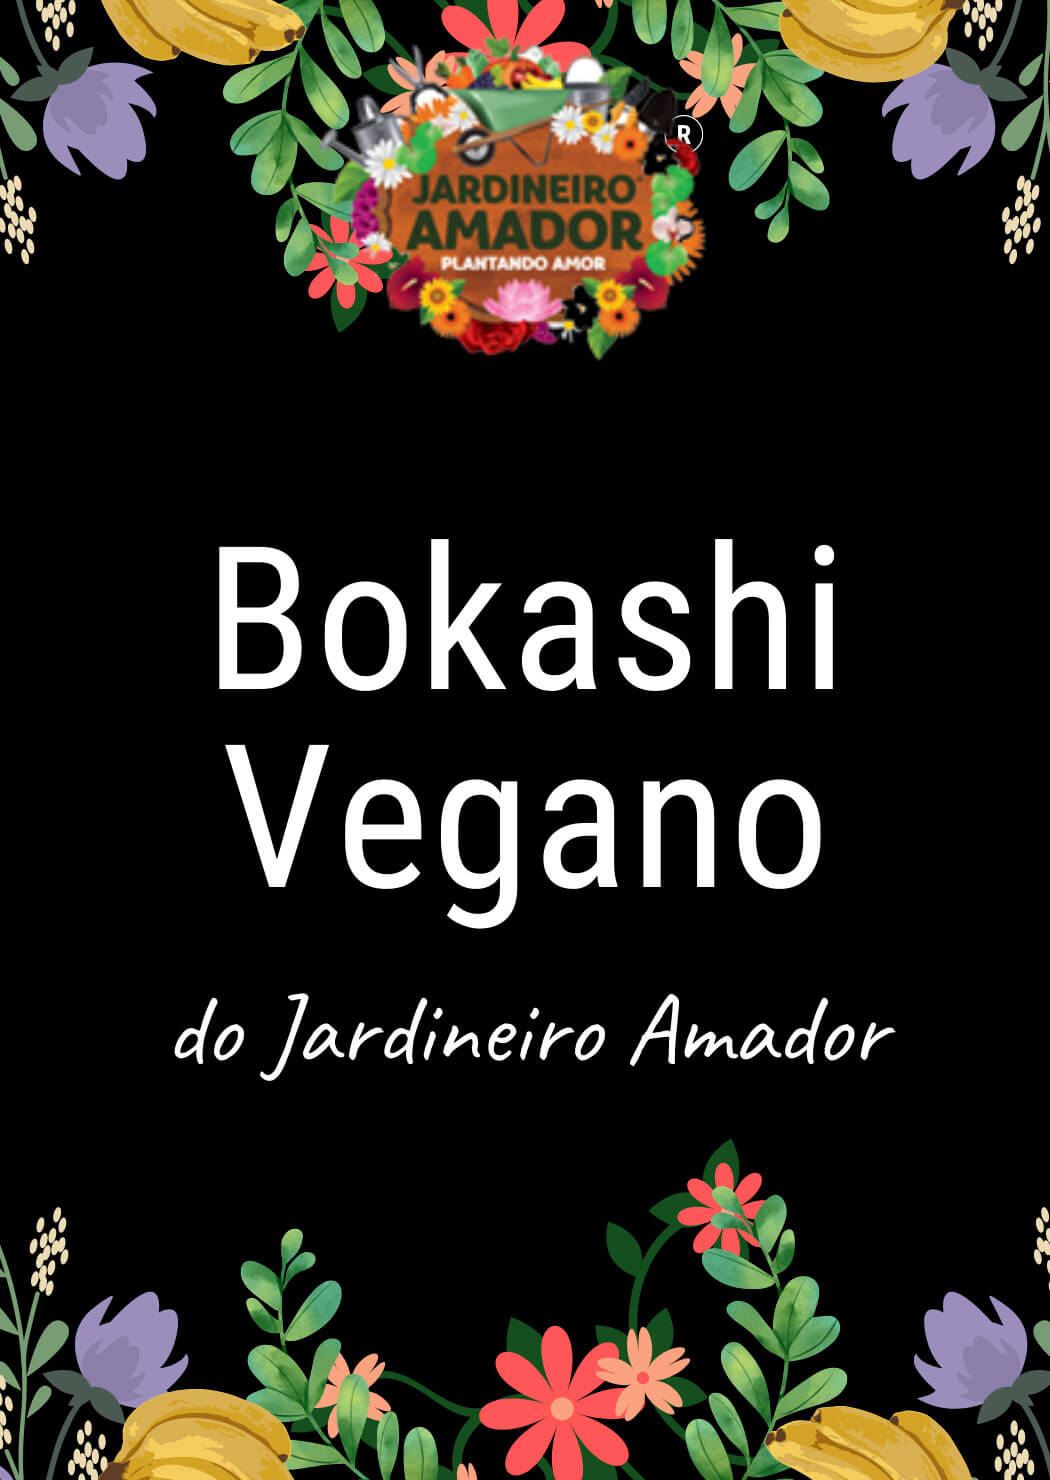 Flyer Bokashi vegano do Jardineiro Amador Capa